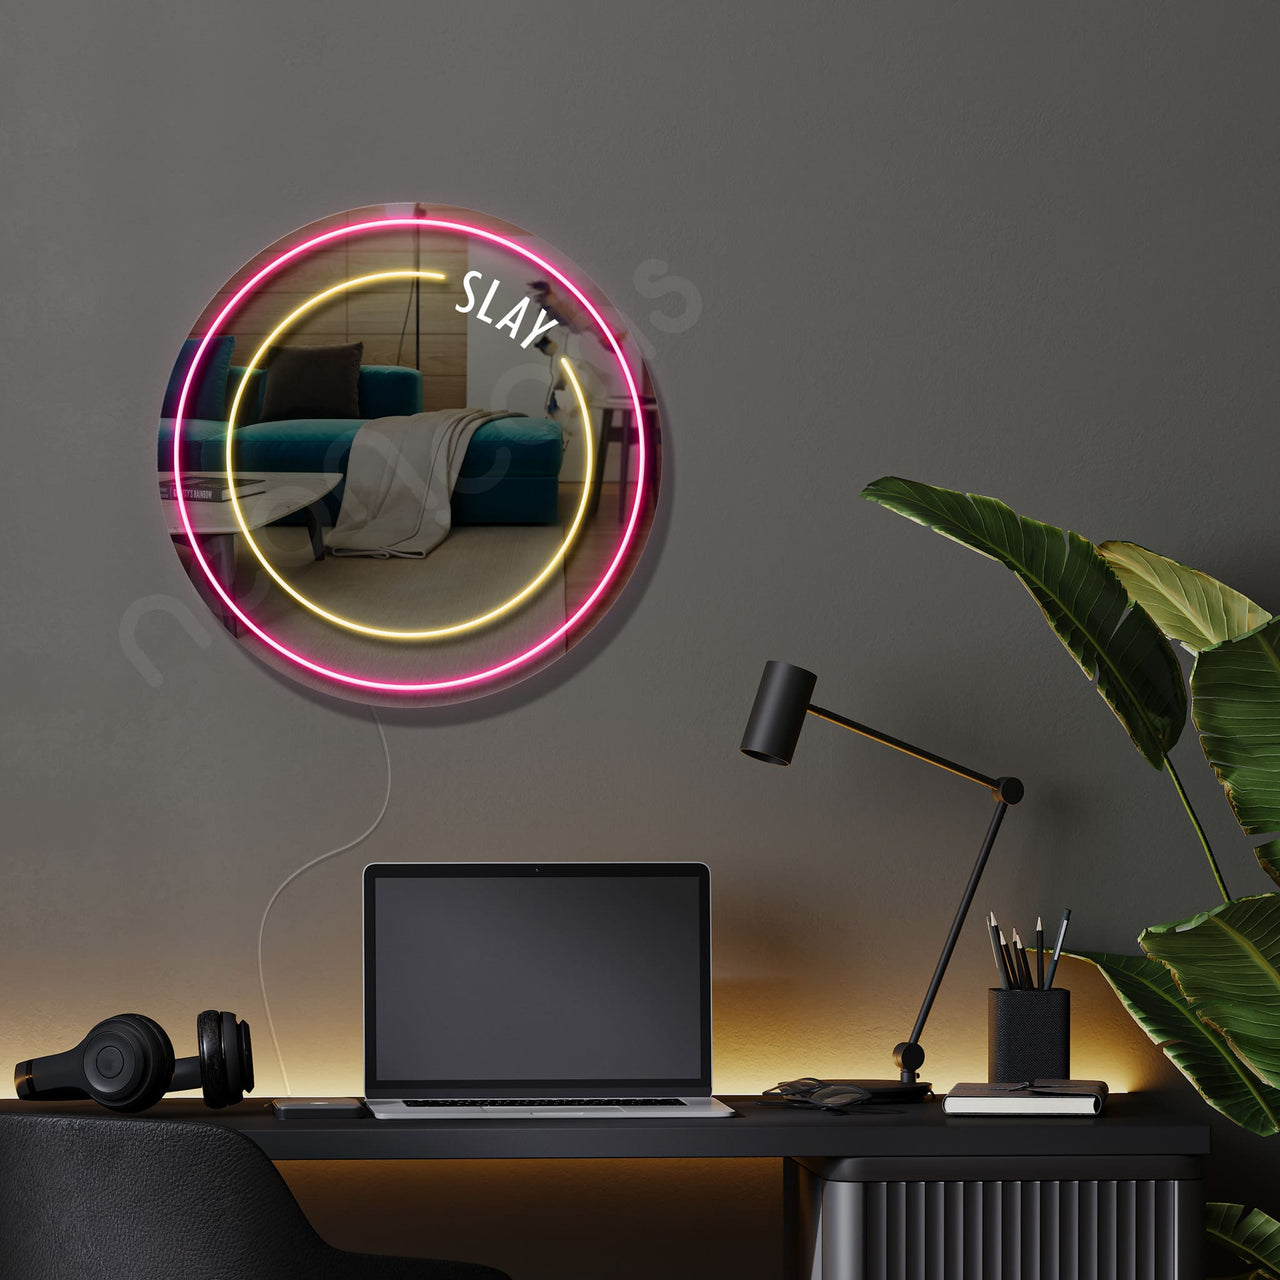 "Slay" LED Neon x Acrylic Mirror by Neon Icons